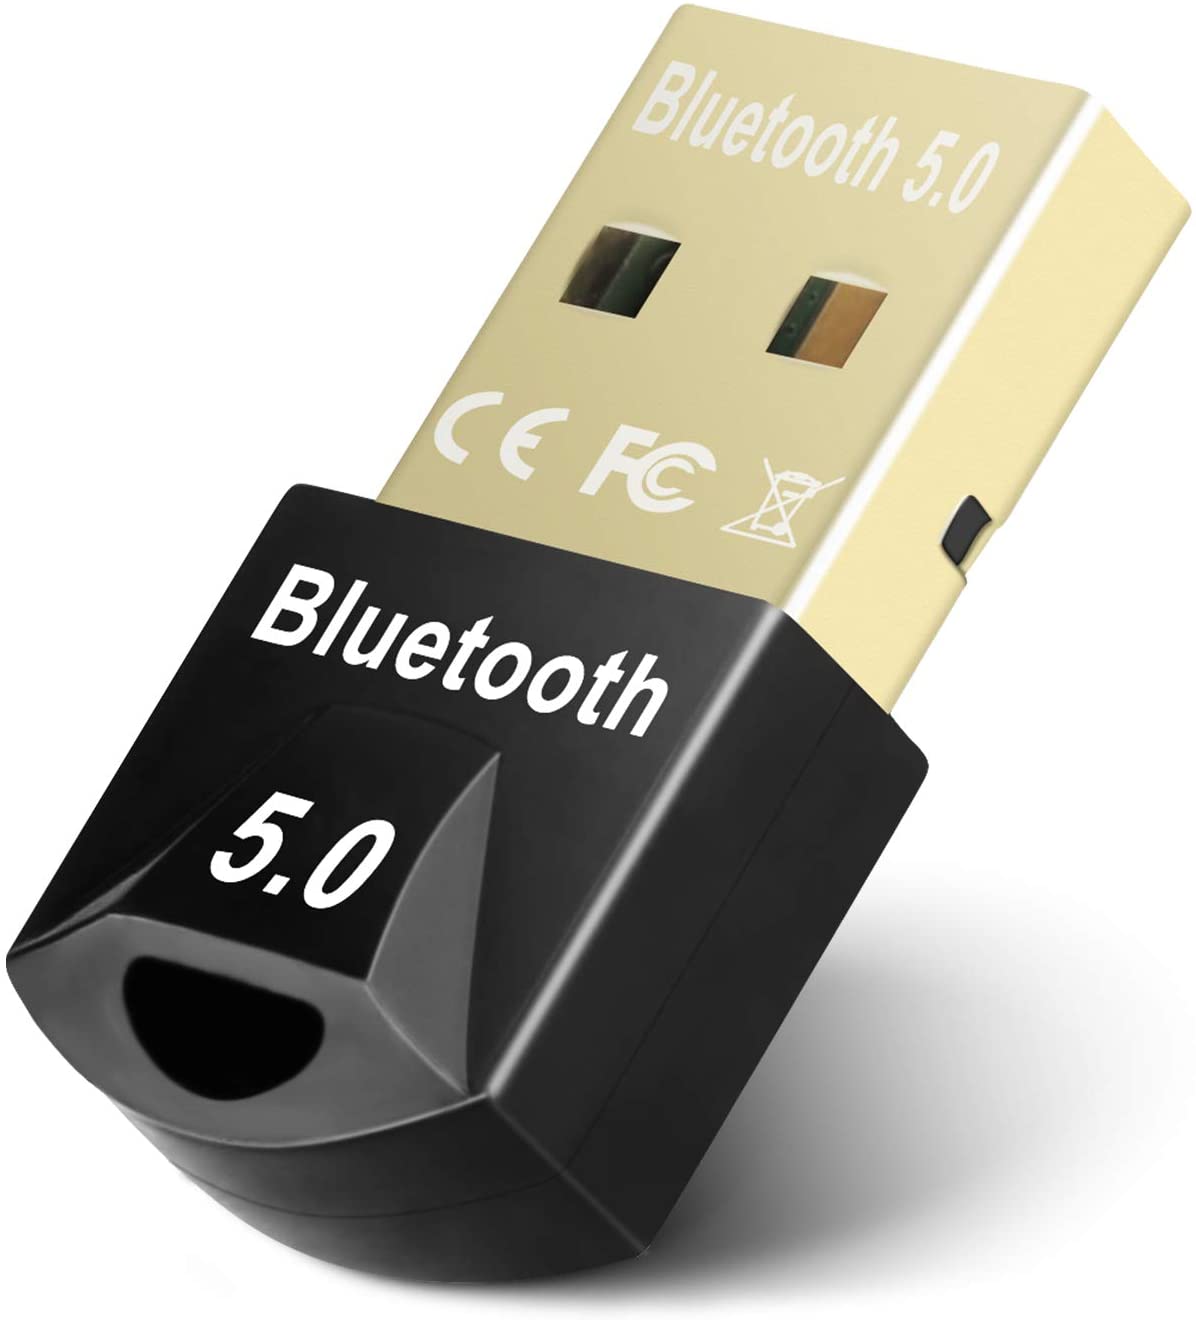 Try USB Bluetooth Adapter